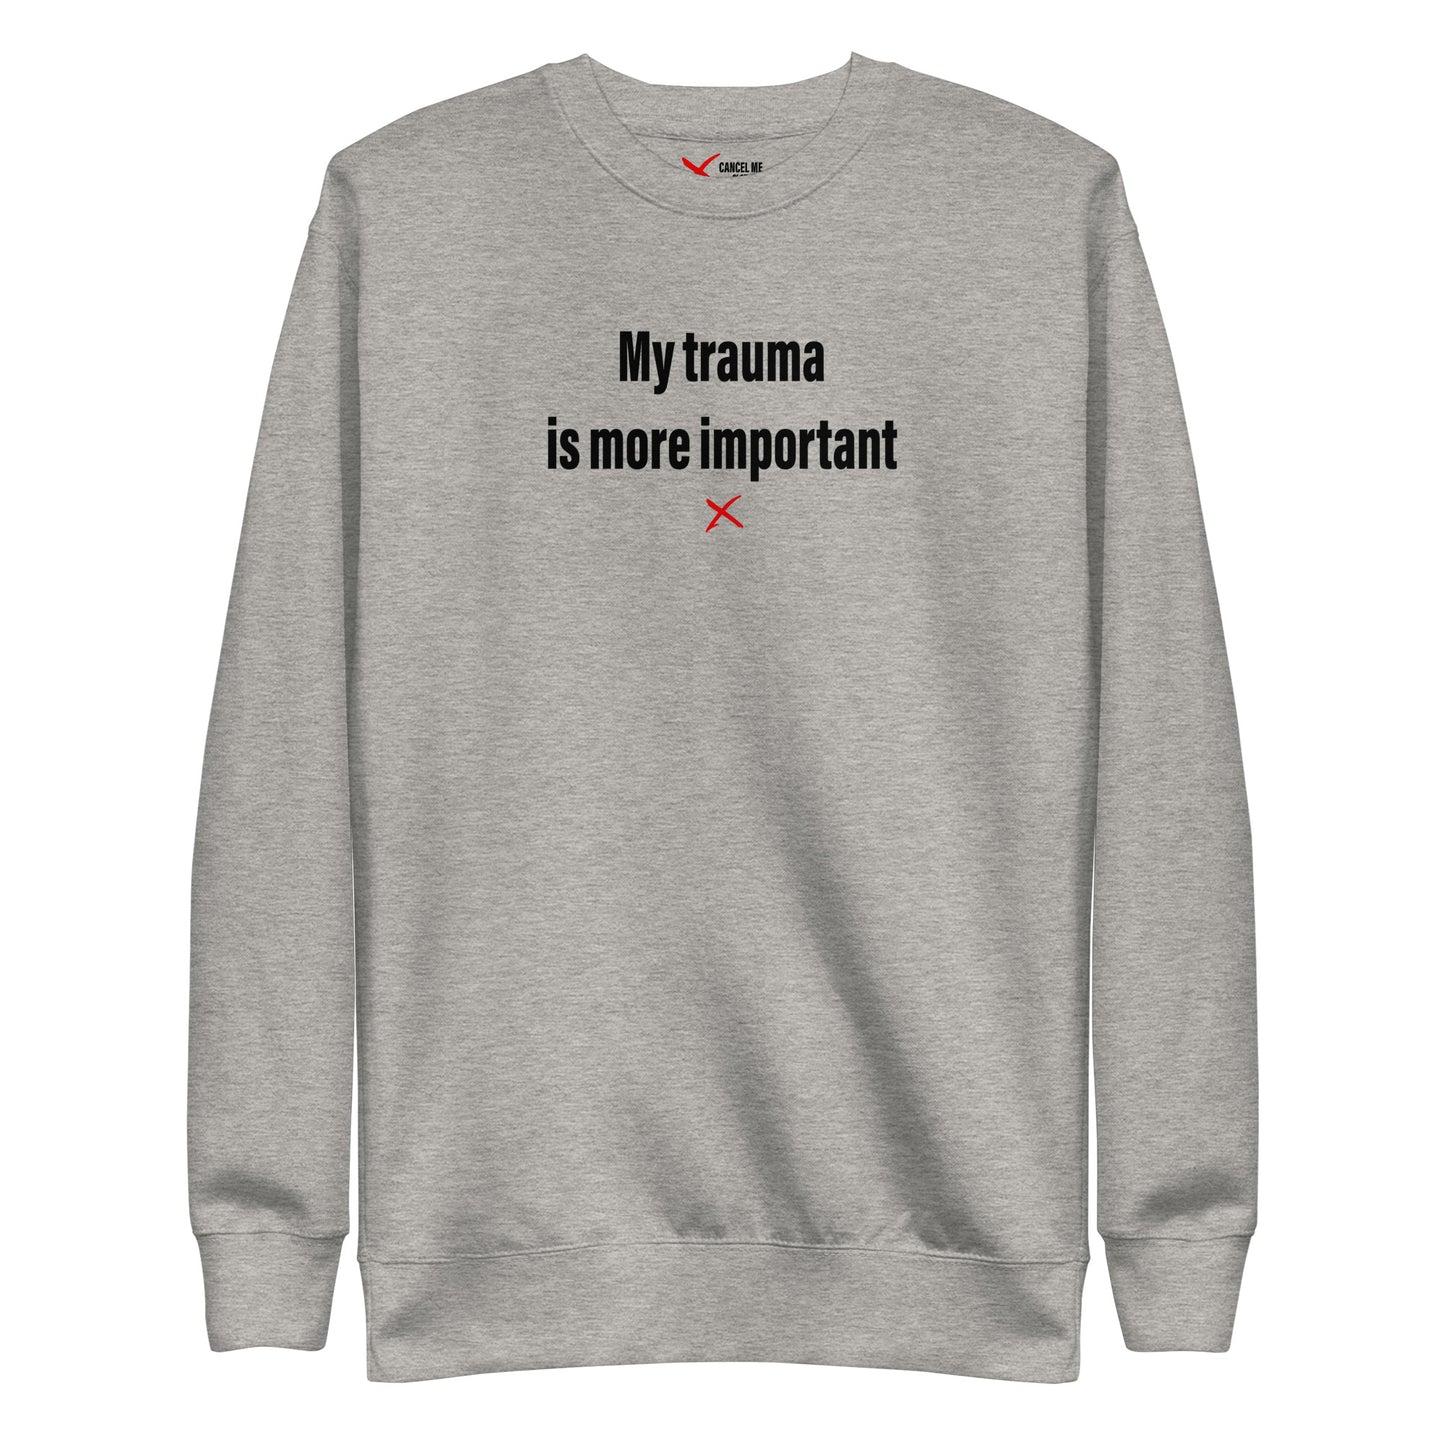 My trauma is more important - Sweatshirt